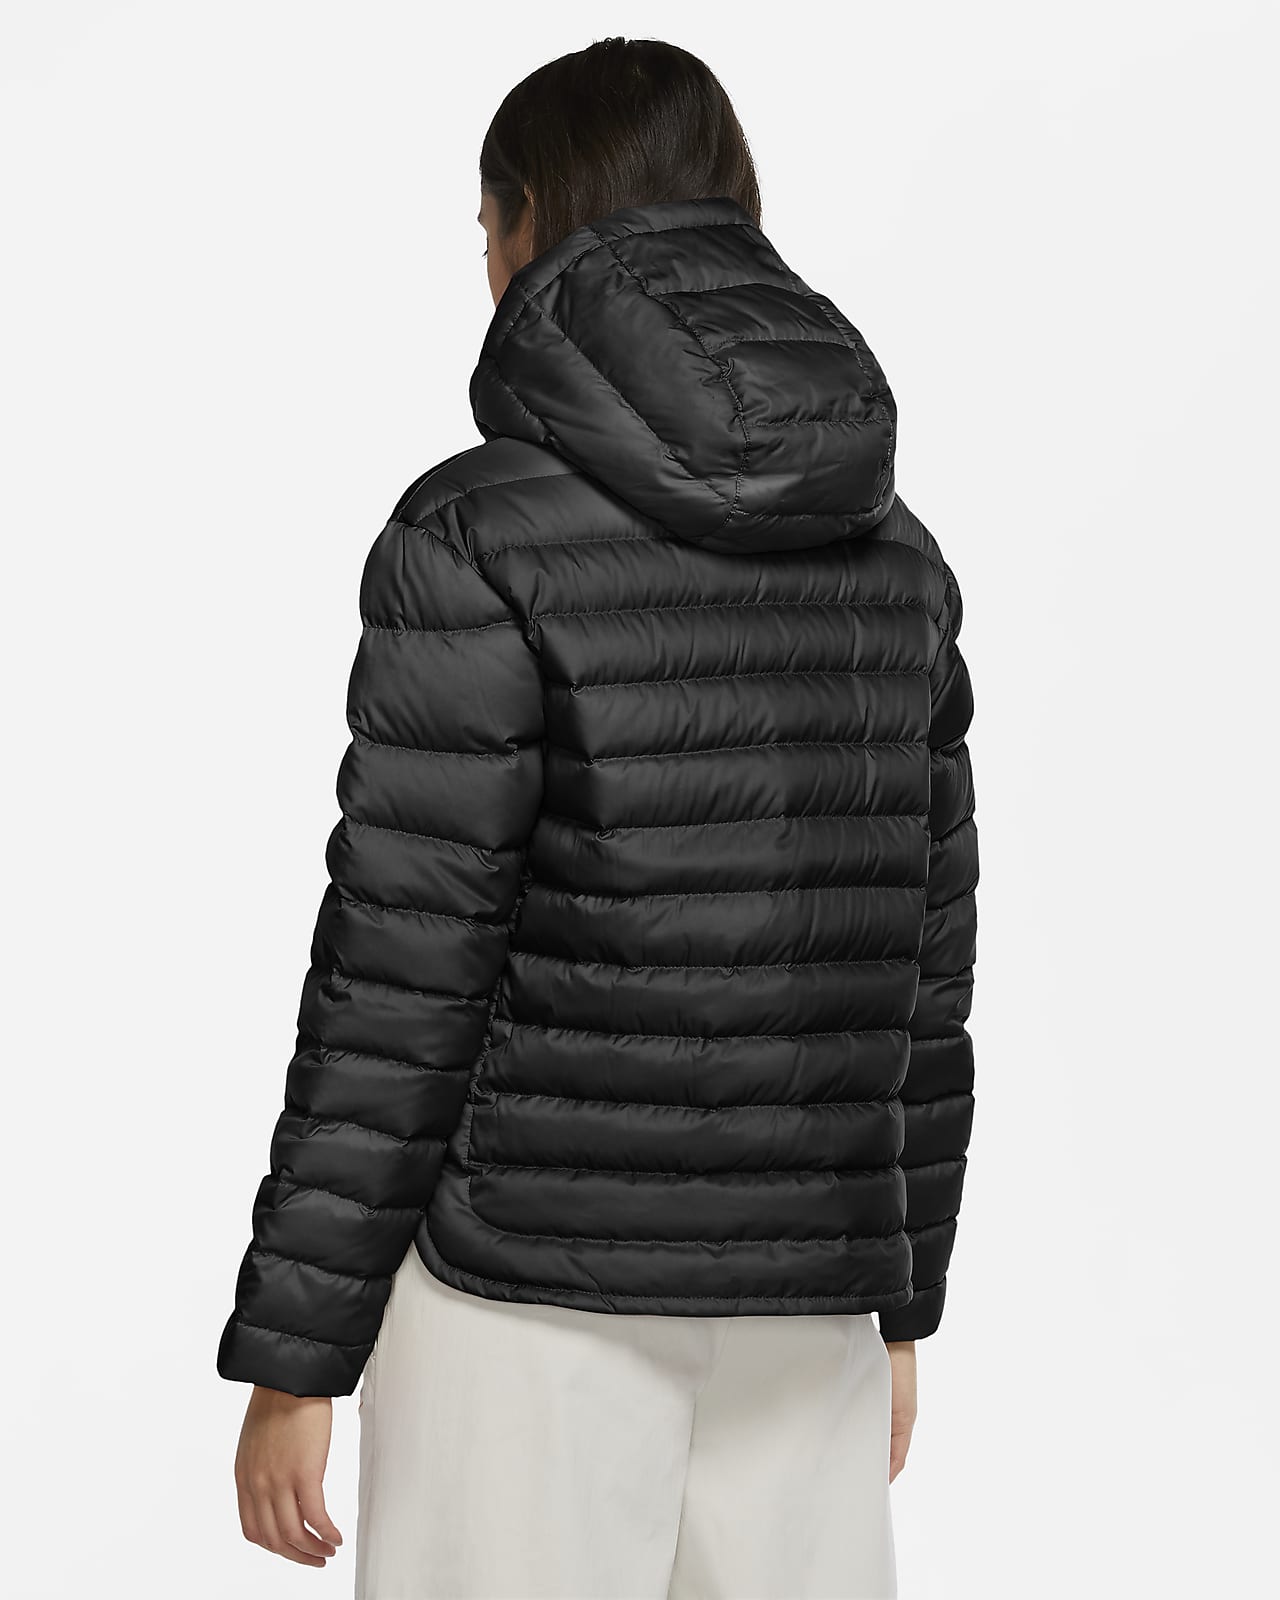 nike women's sportswear windrunner jacket black and white